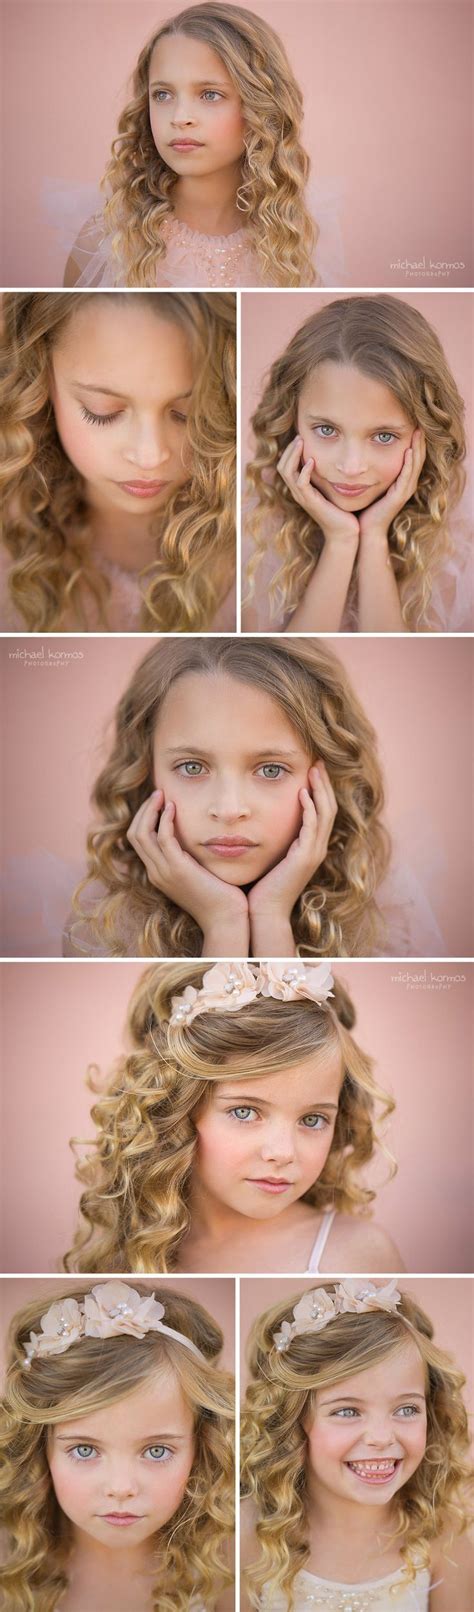 13 Best Cute Kid Models Images On Pinterest Child Actors Kid Models